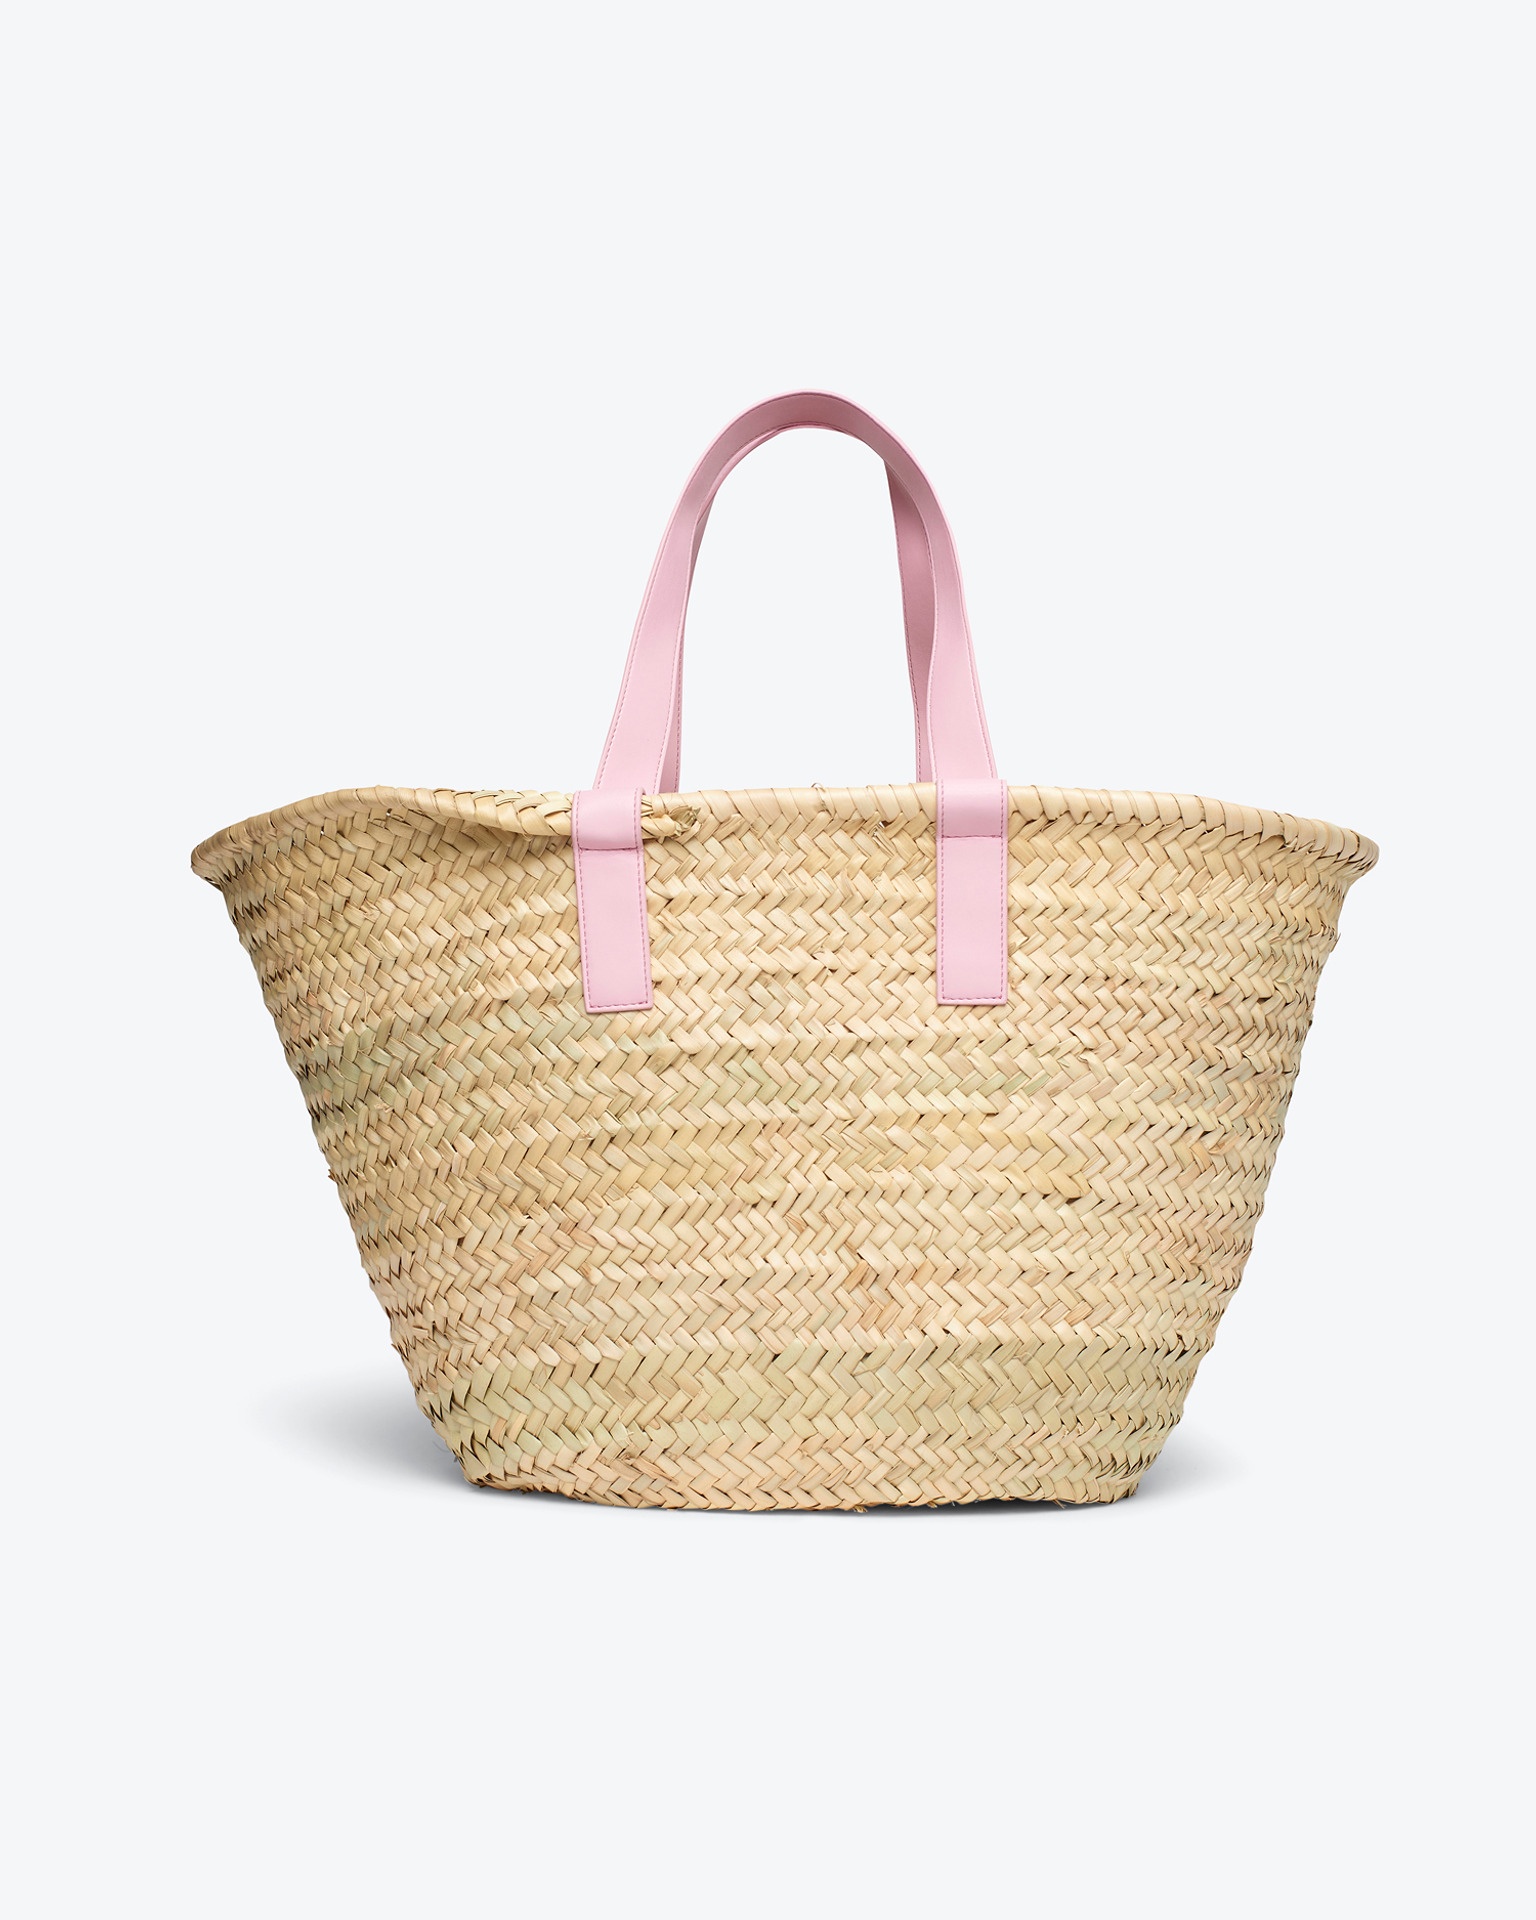 THE BEACH BAG - Raffia tote - Natural/pink/creme - 3